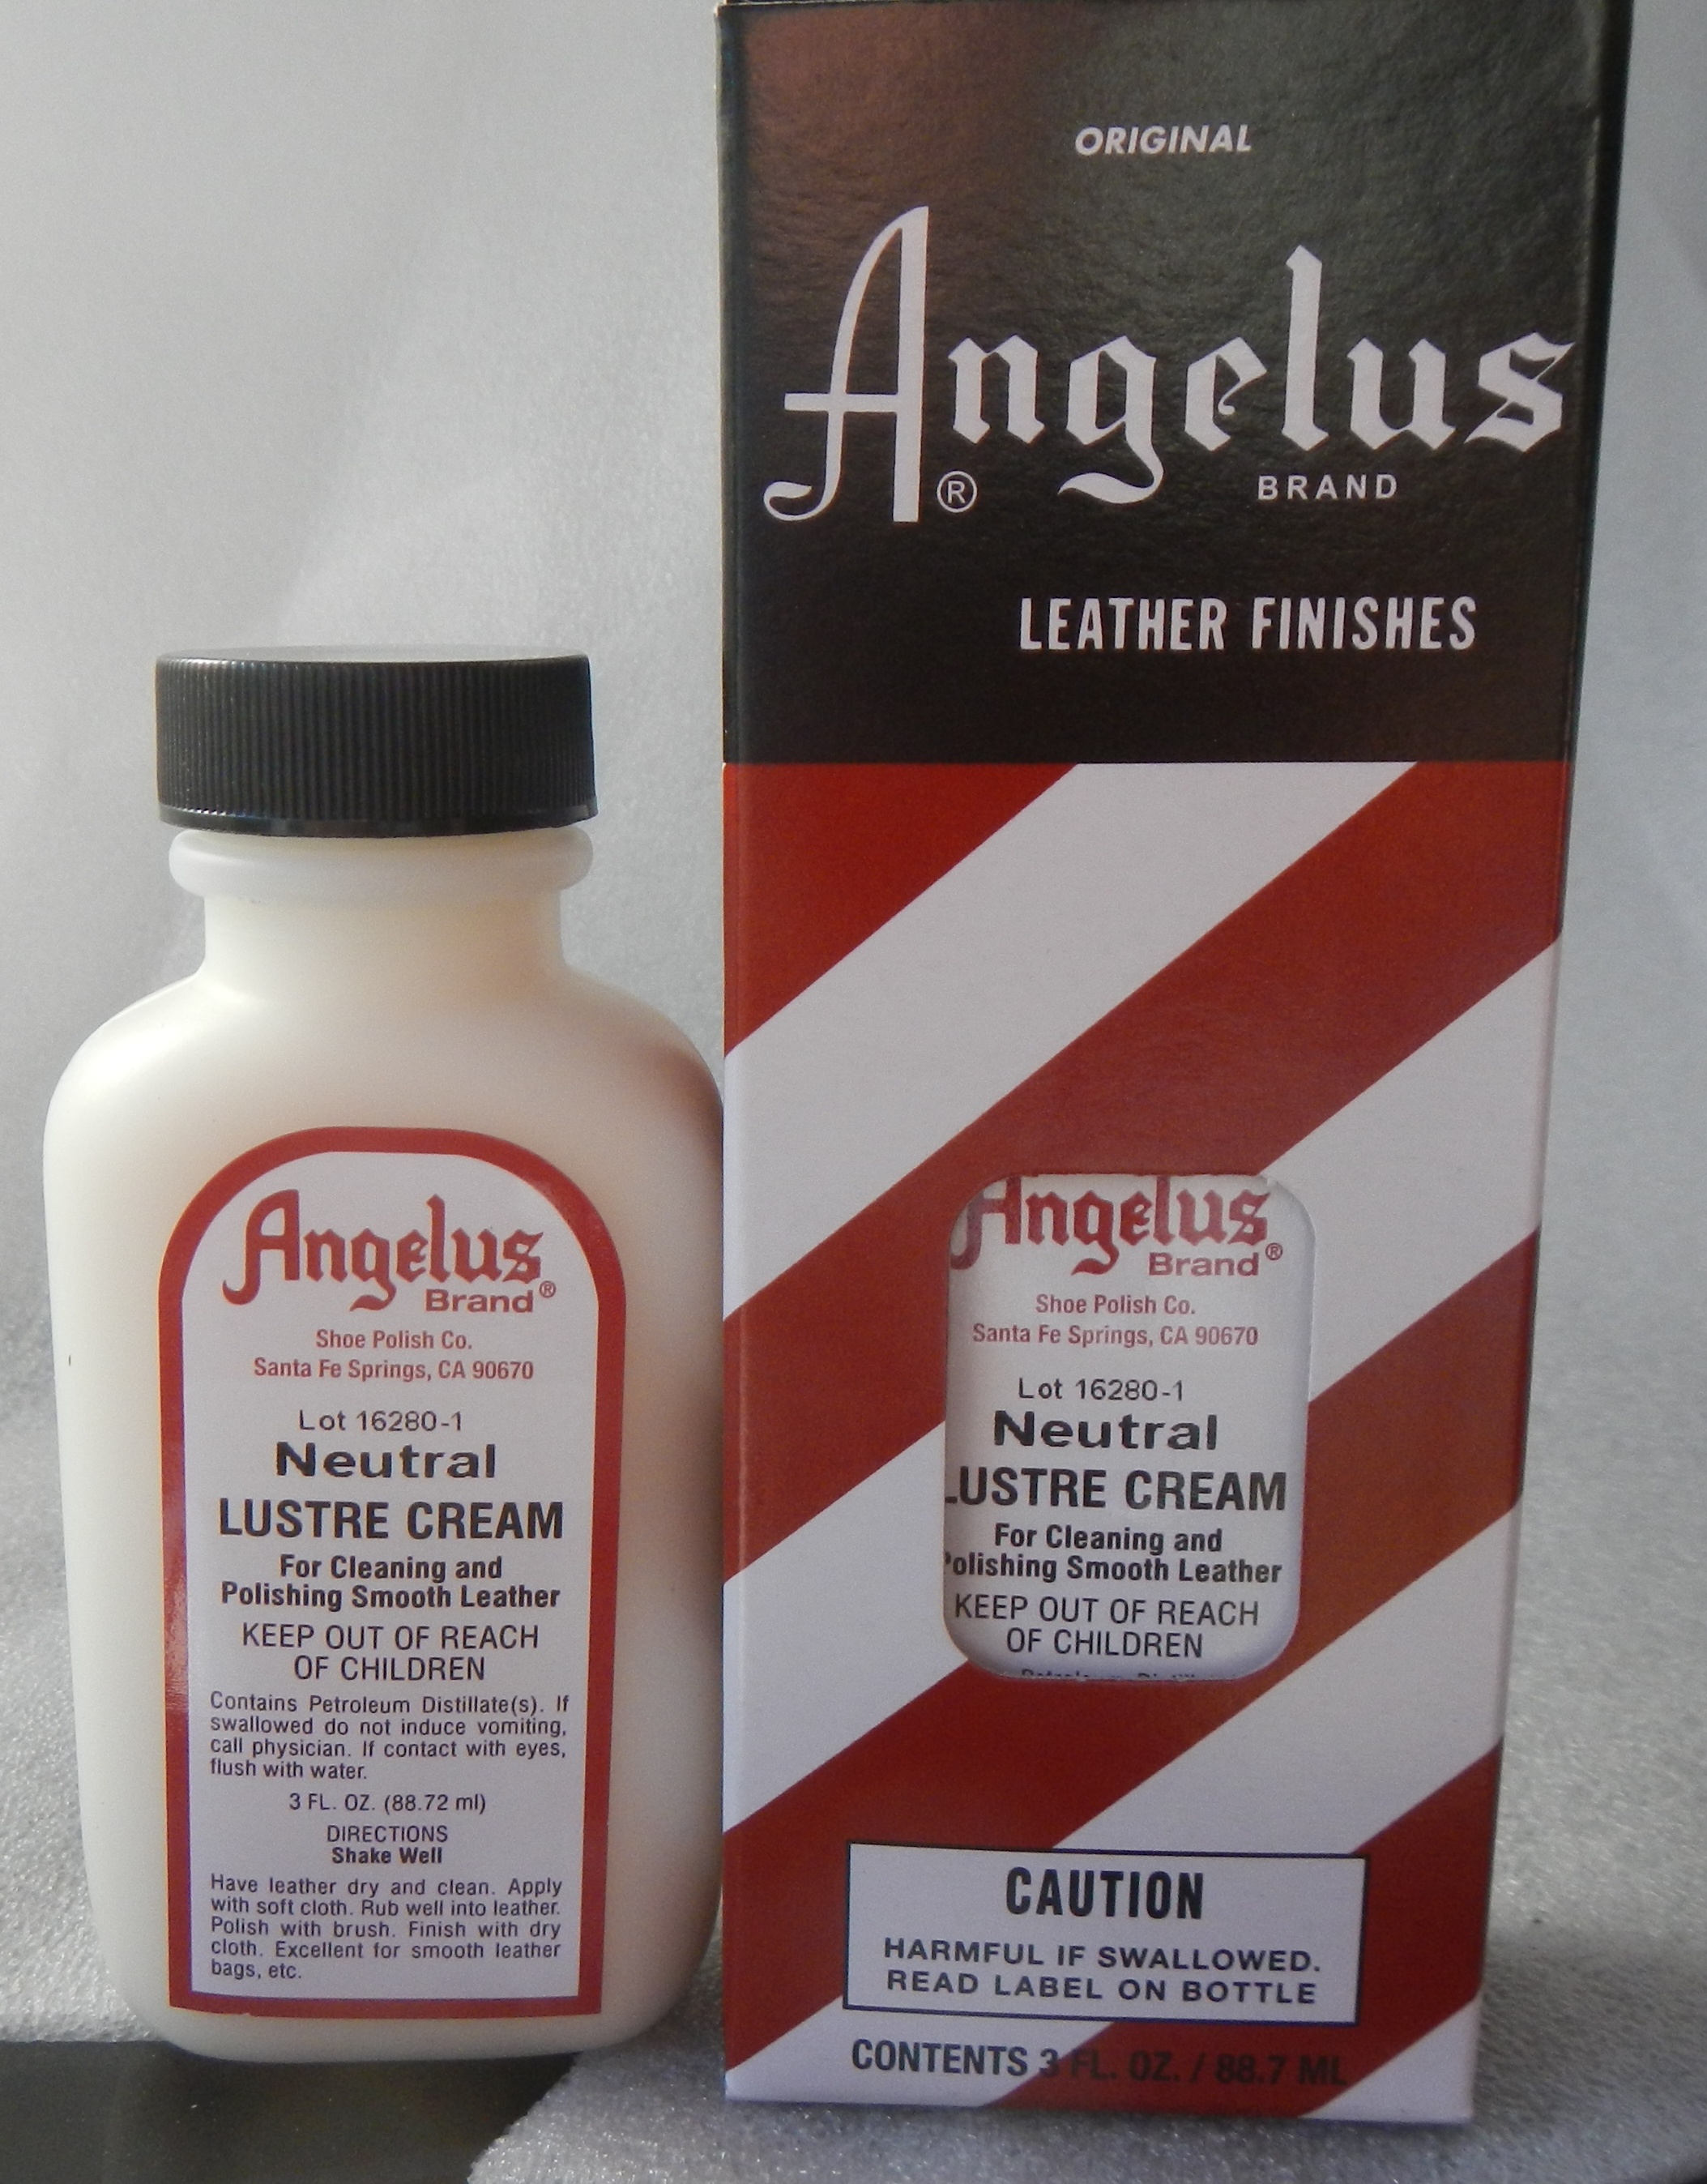 Angelus Leather Dye Neutral